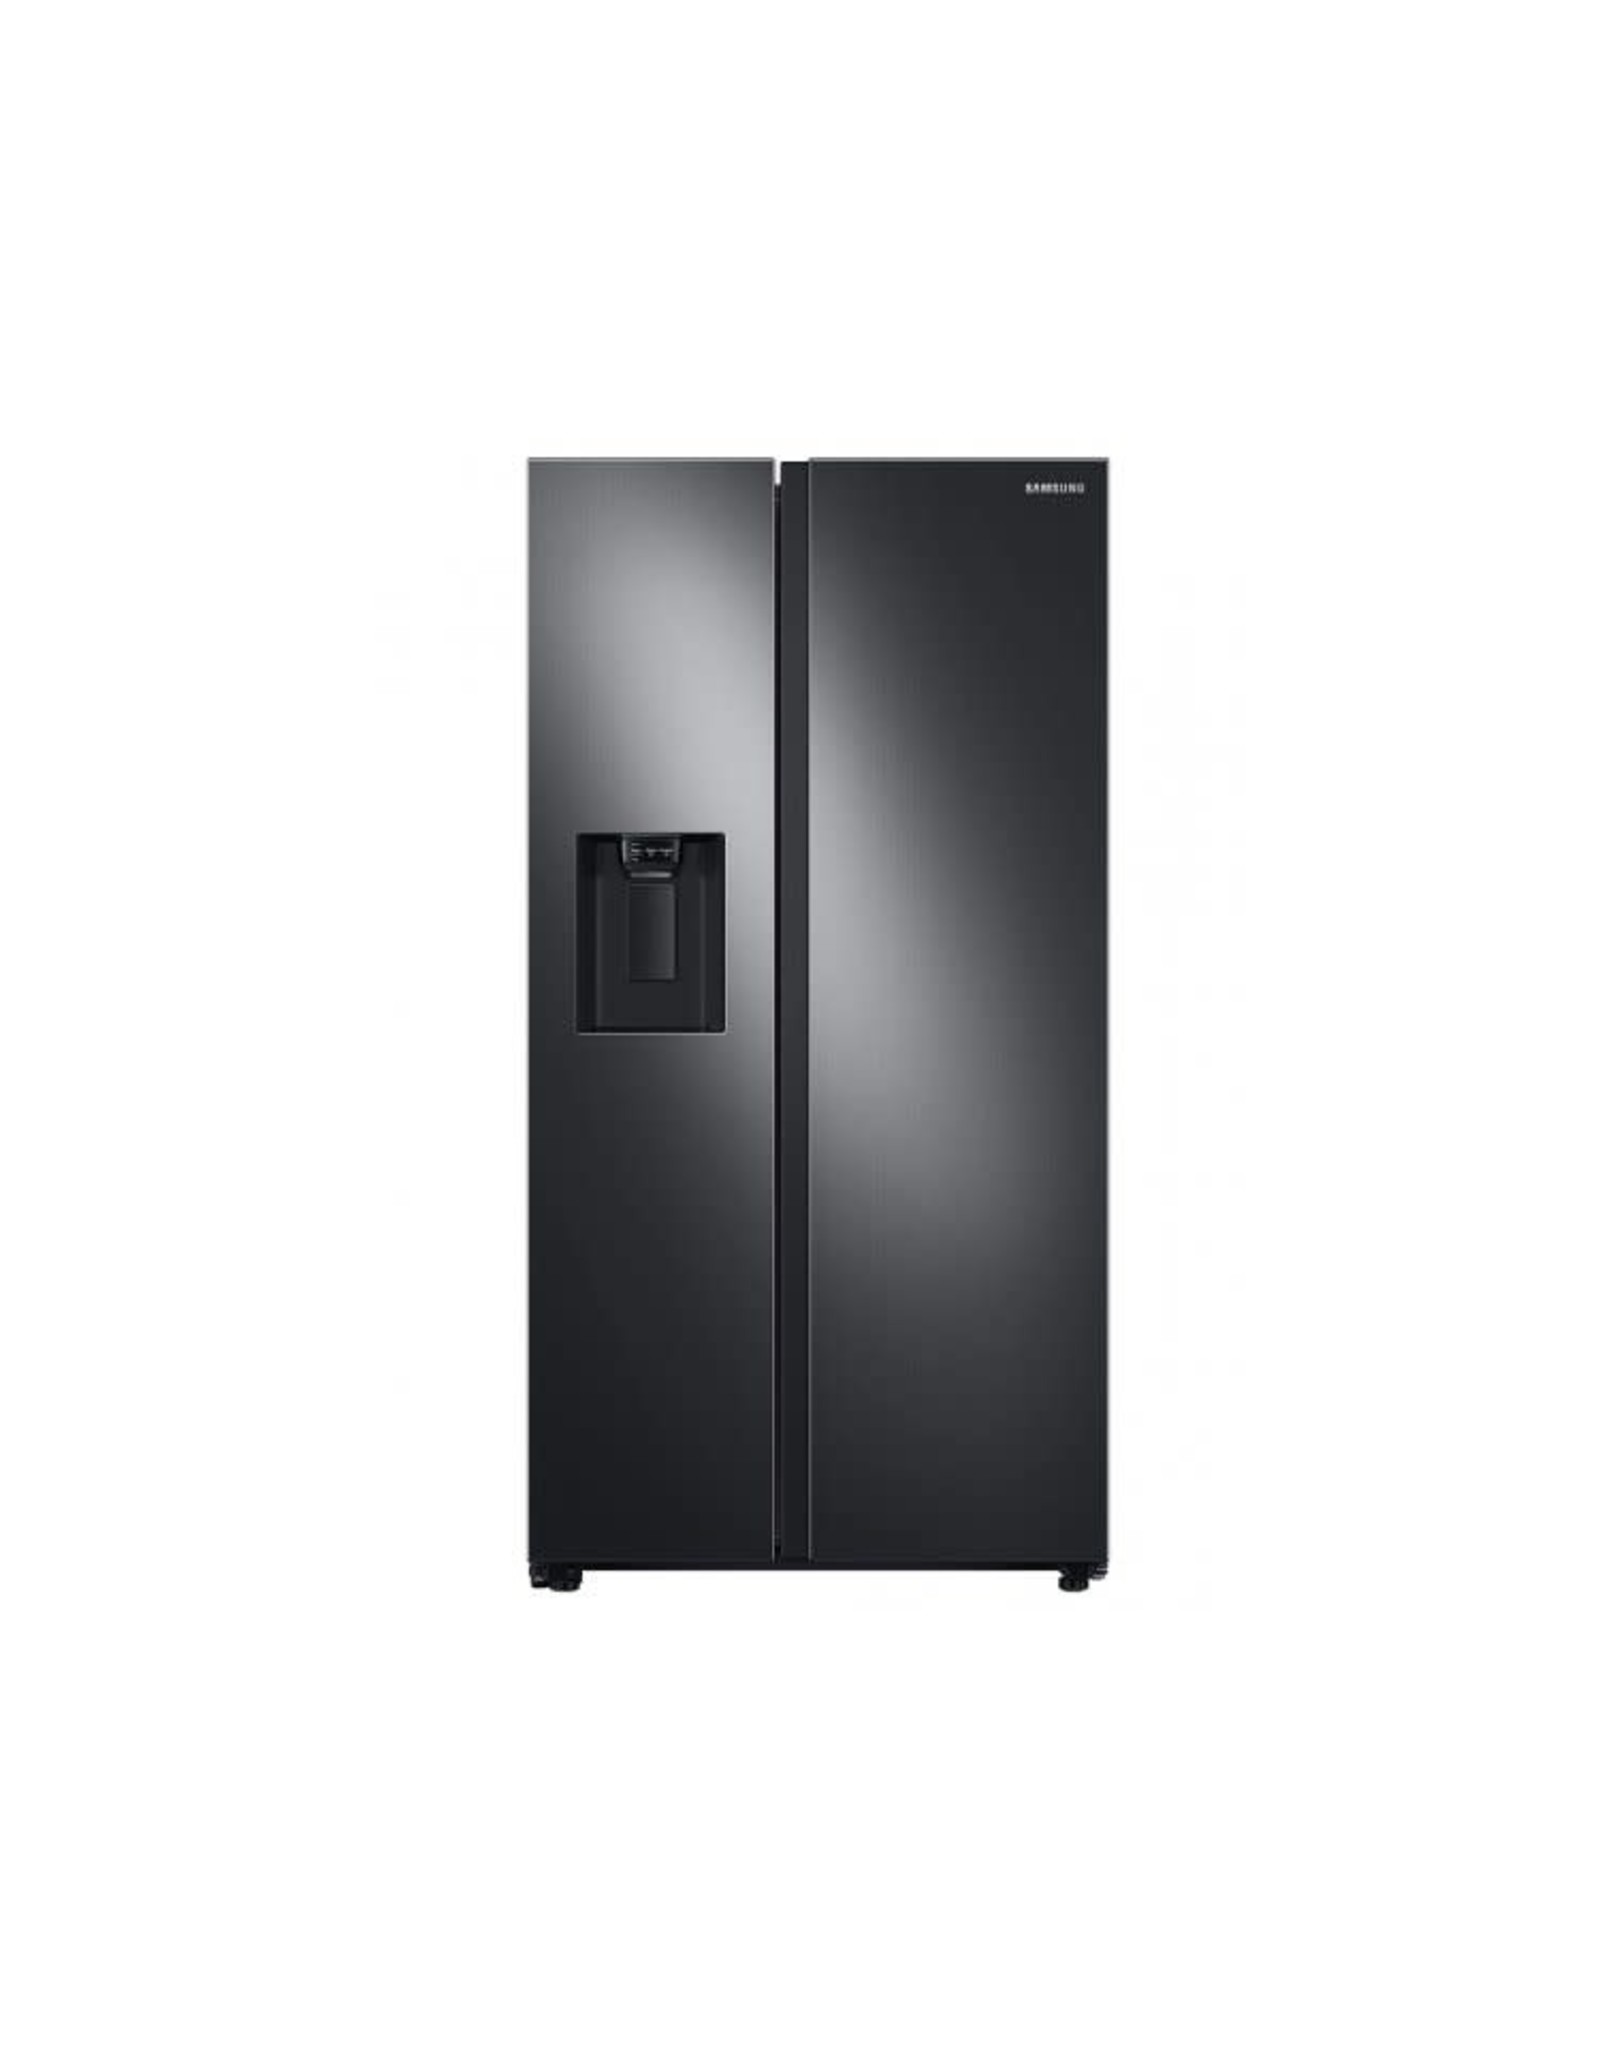 SAMSUNG RS22T5201SG 36 in. 22 cu. ft. Smart Side by Side Refrigerator in Fingerprint-Resistant Black Stainless Steel, Counter Depth